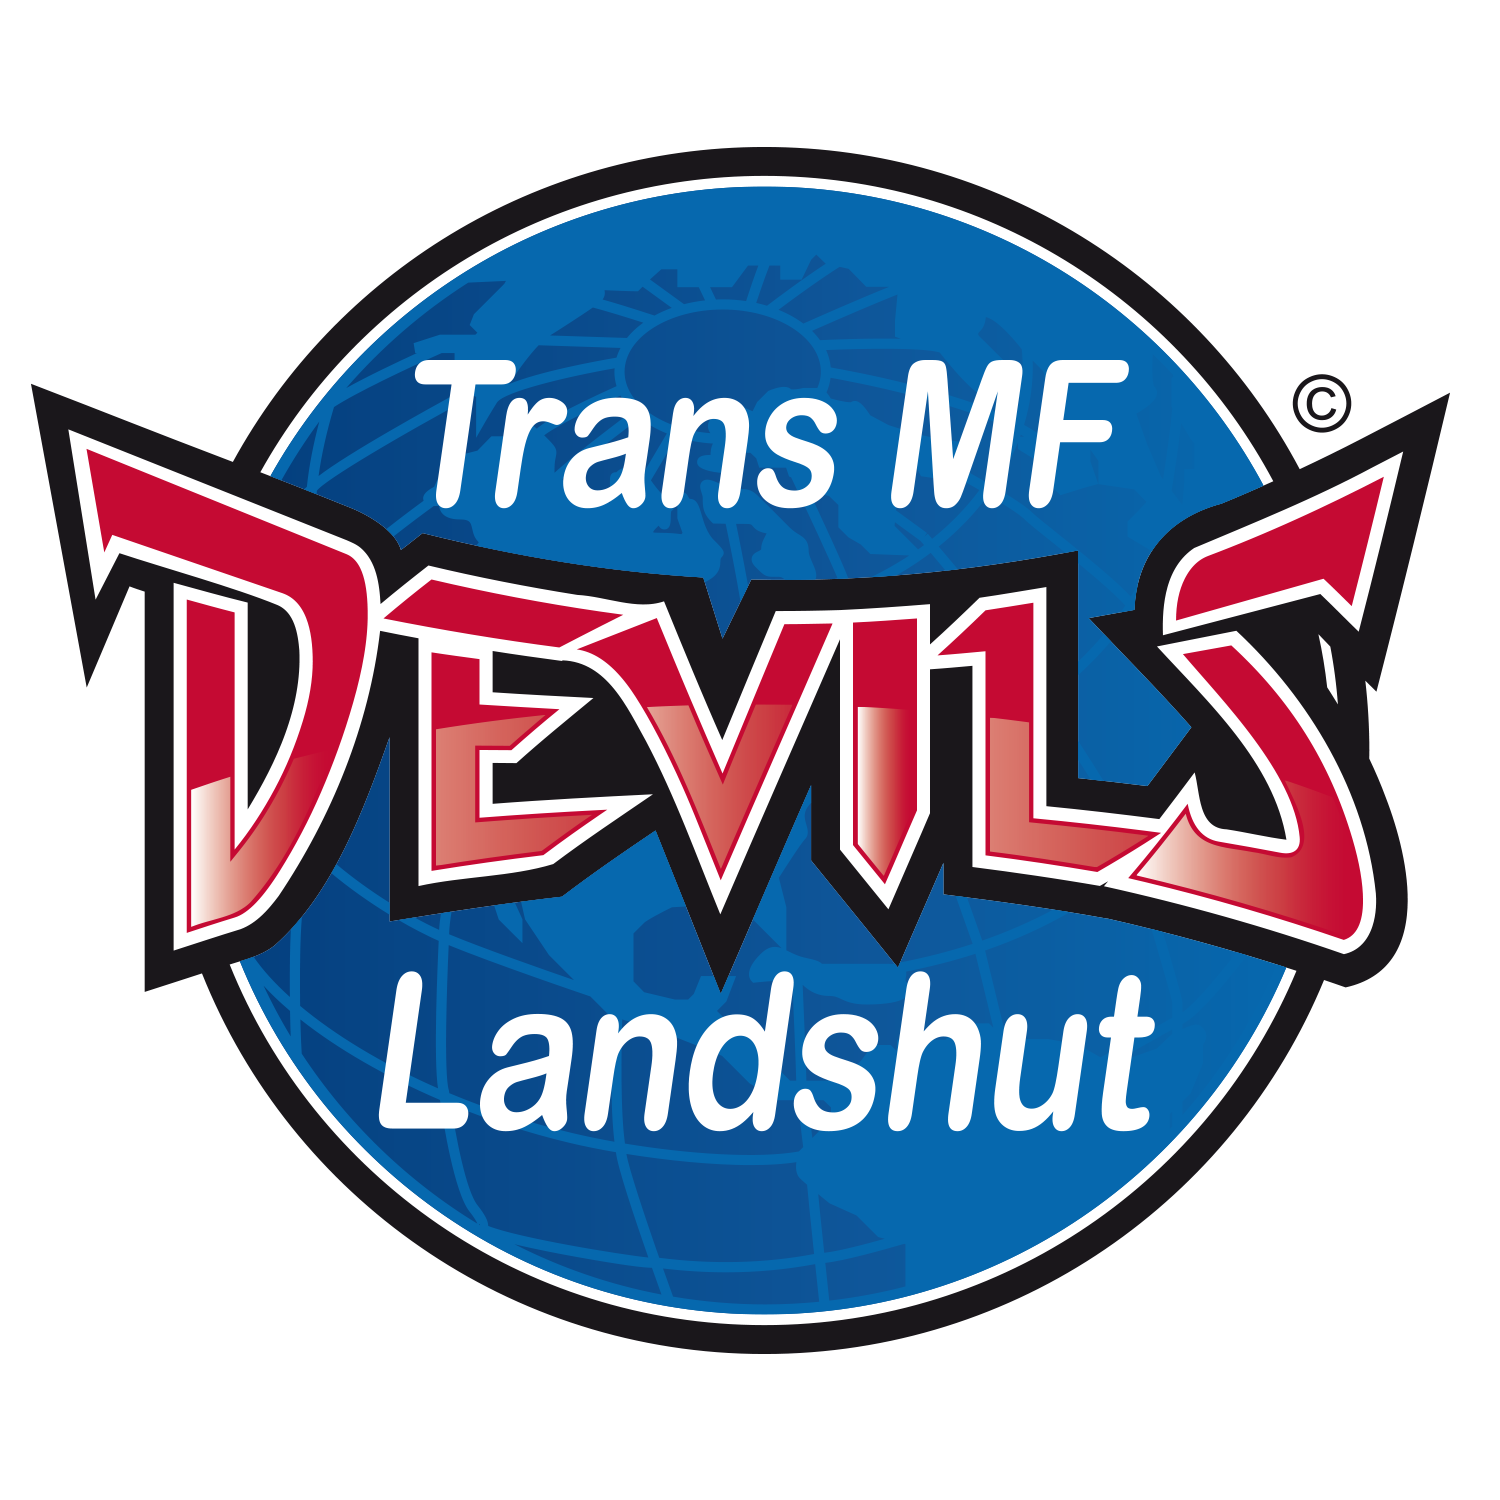 Trans MF Landshut Devils